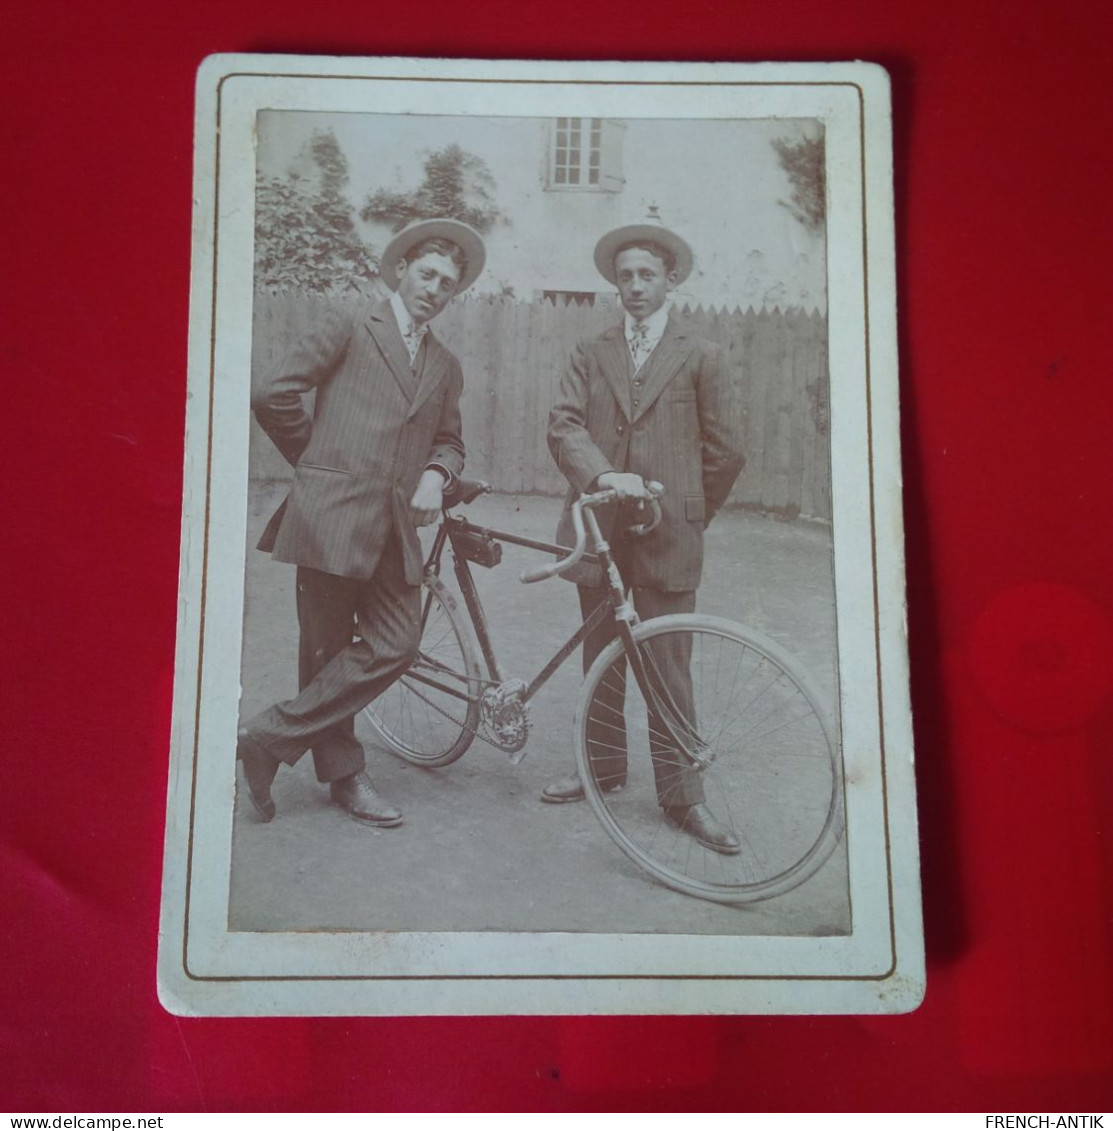 PHOTO AGDE 1911 CYCLISTES - Cycling